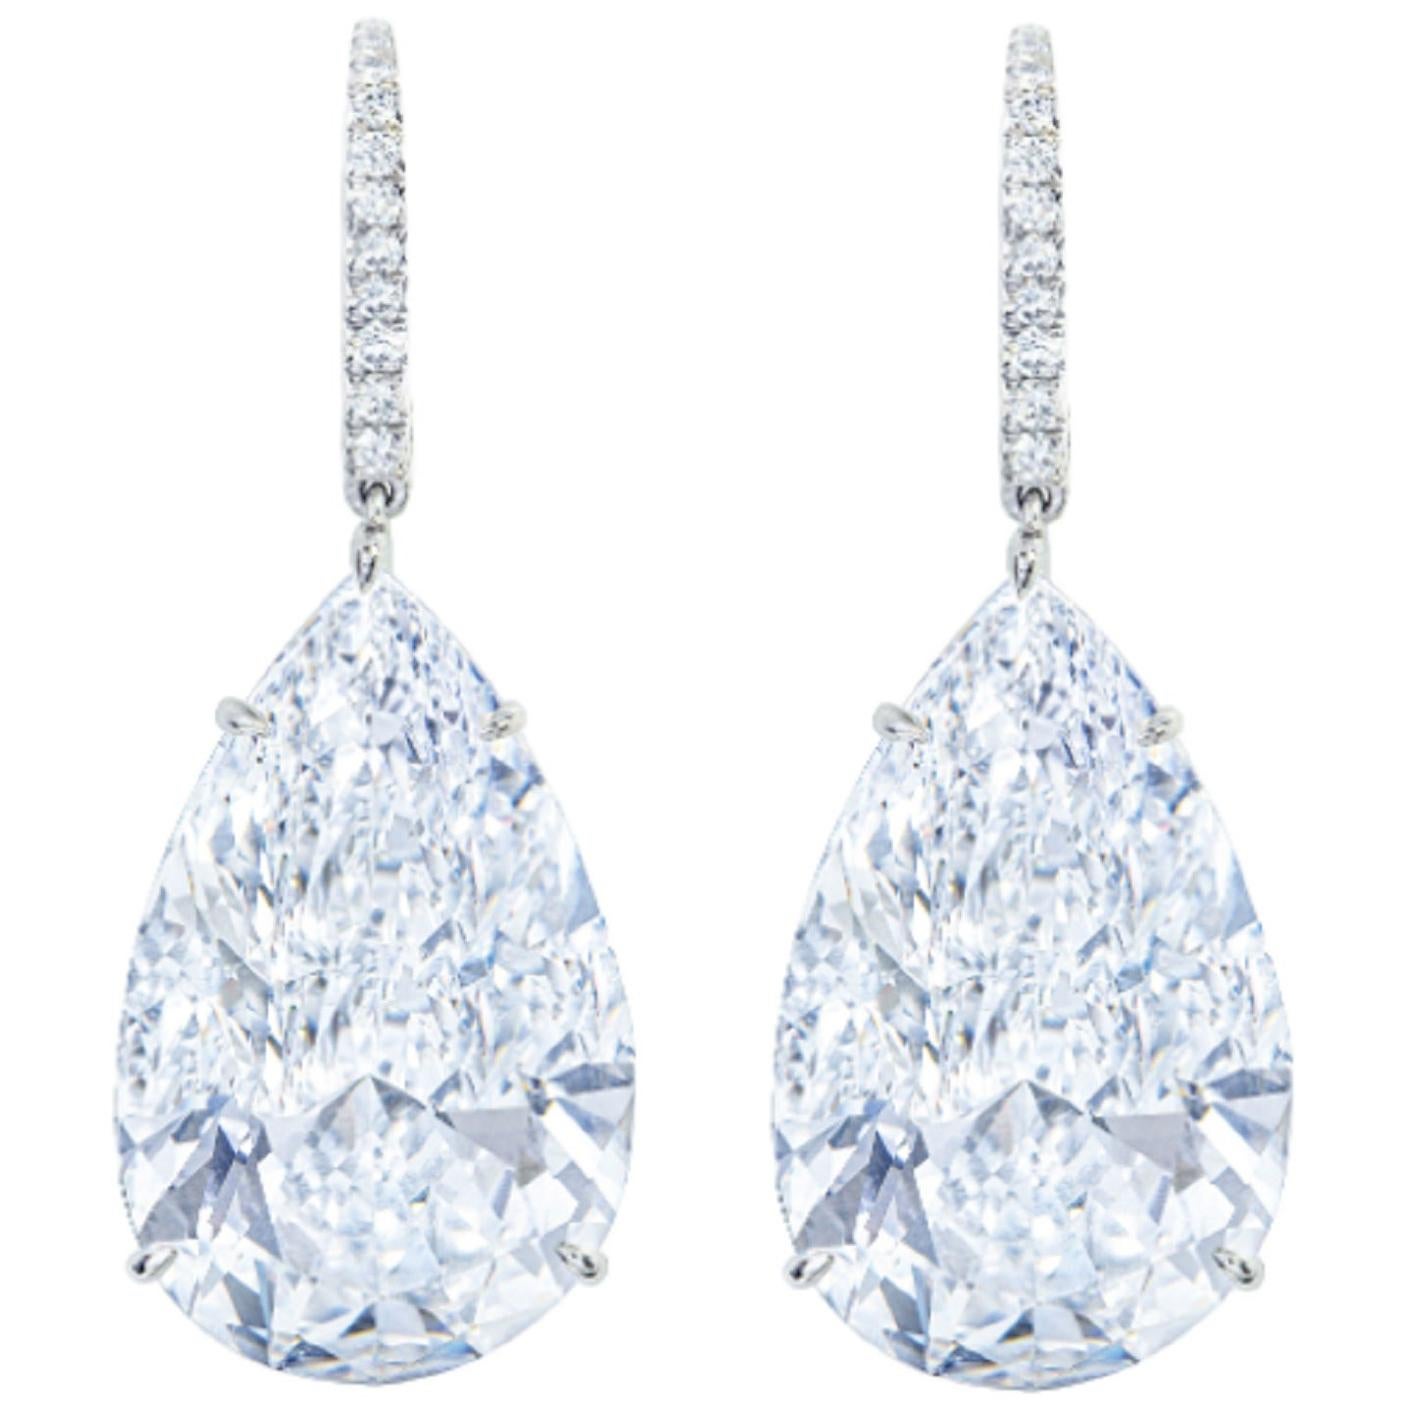 GIA Certified 6.02 Carat Pear Cut Diamond Dangle Earrings